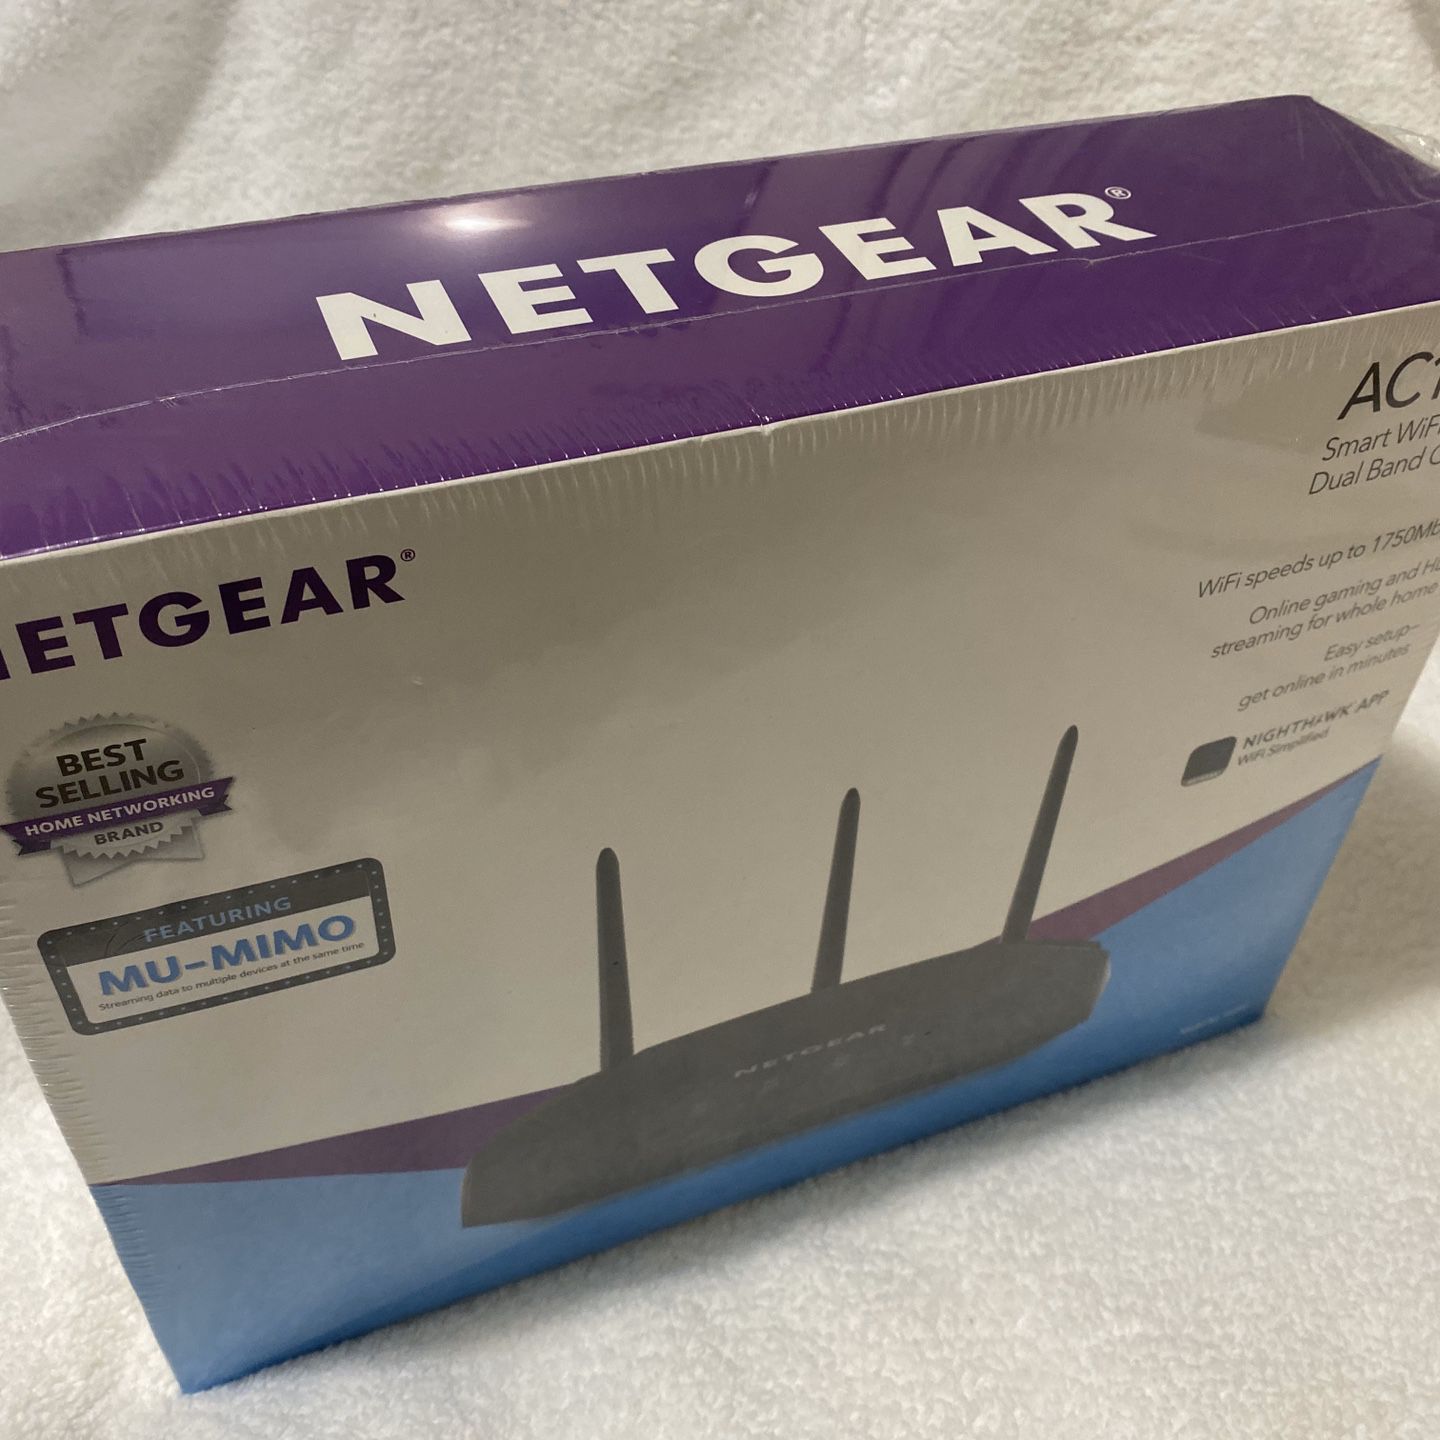 🔹 BRAND NEW! 🔹 ▹ NETGEAR® AC1750 Smart WiFi Router / Dual Band Gigabit!